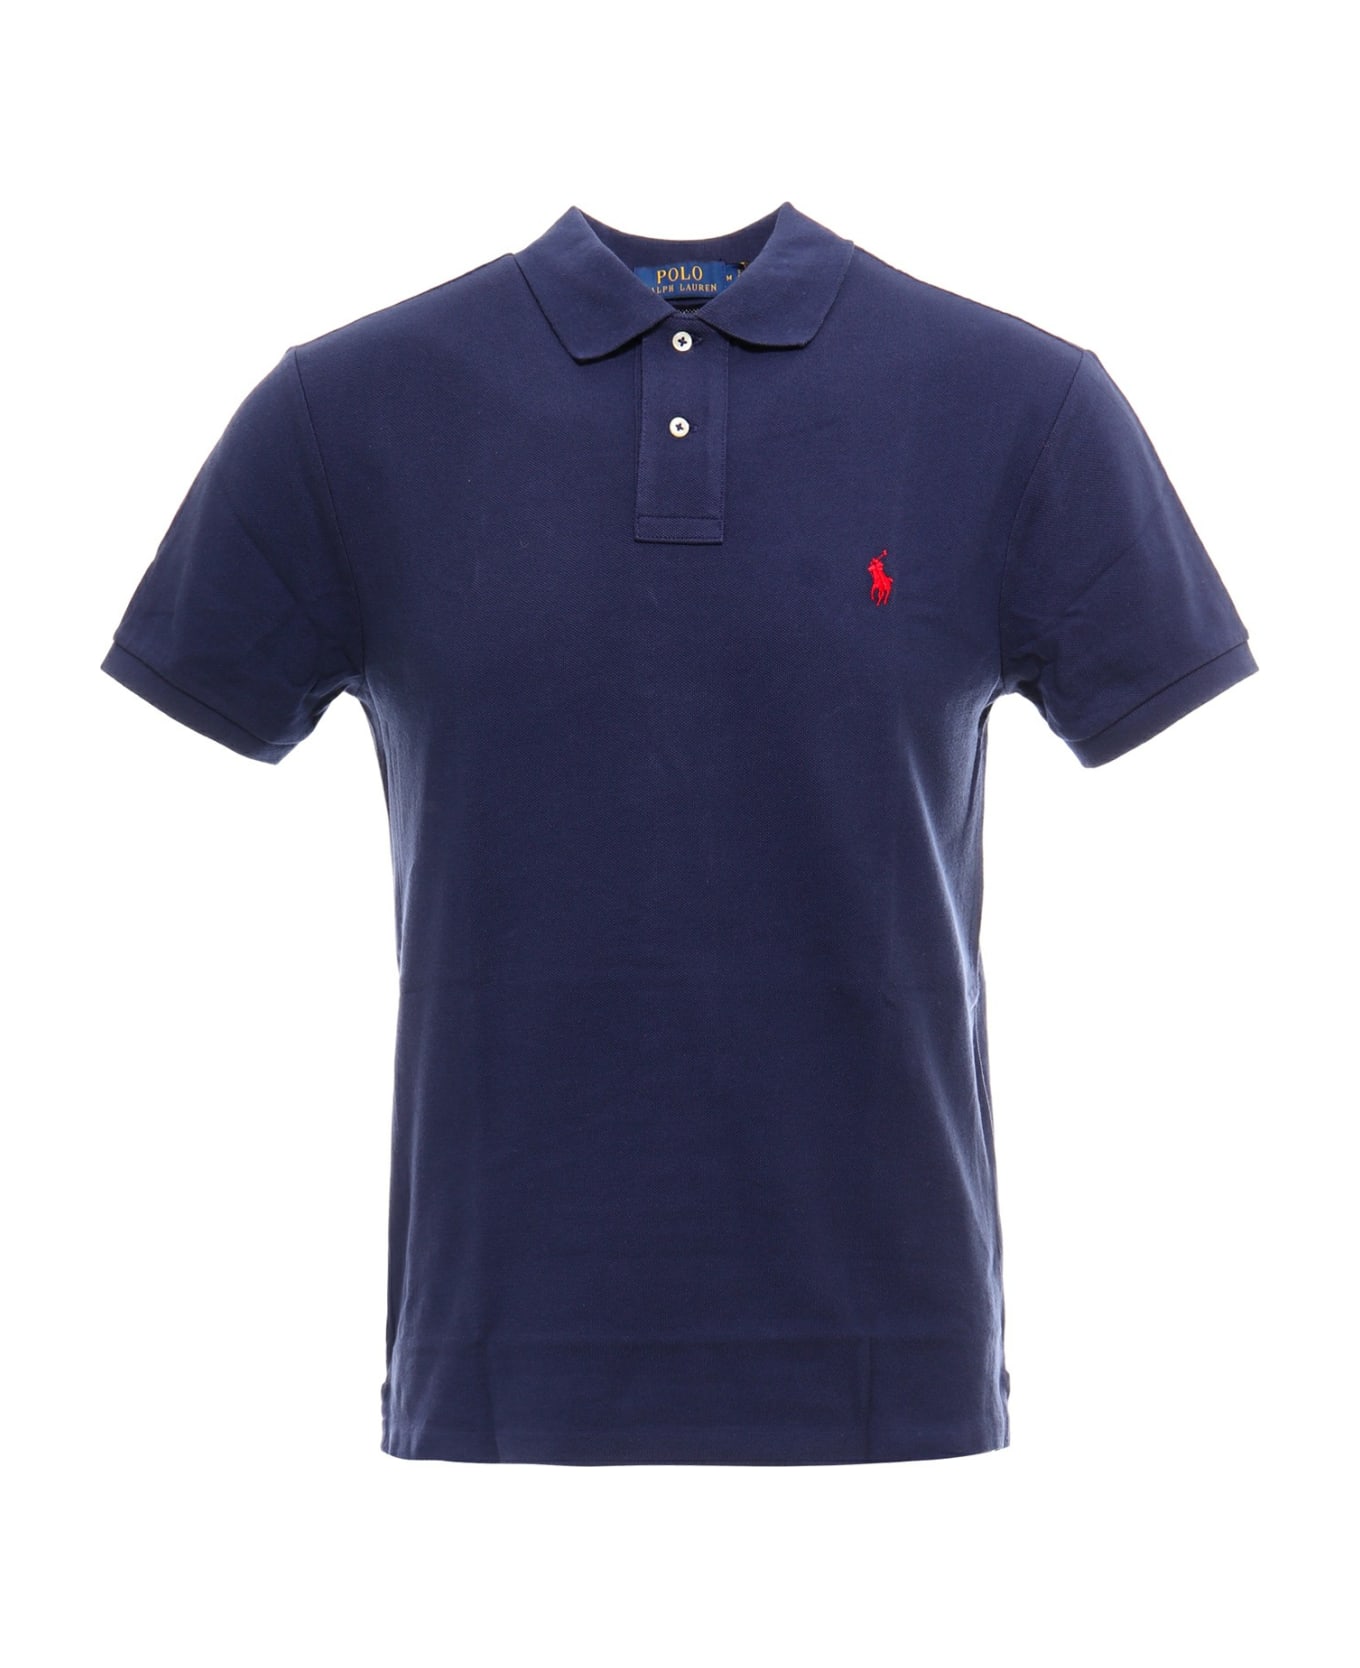 Polo Ralph Lauren Polo Shirt - Newport navy